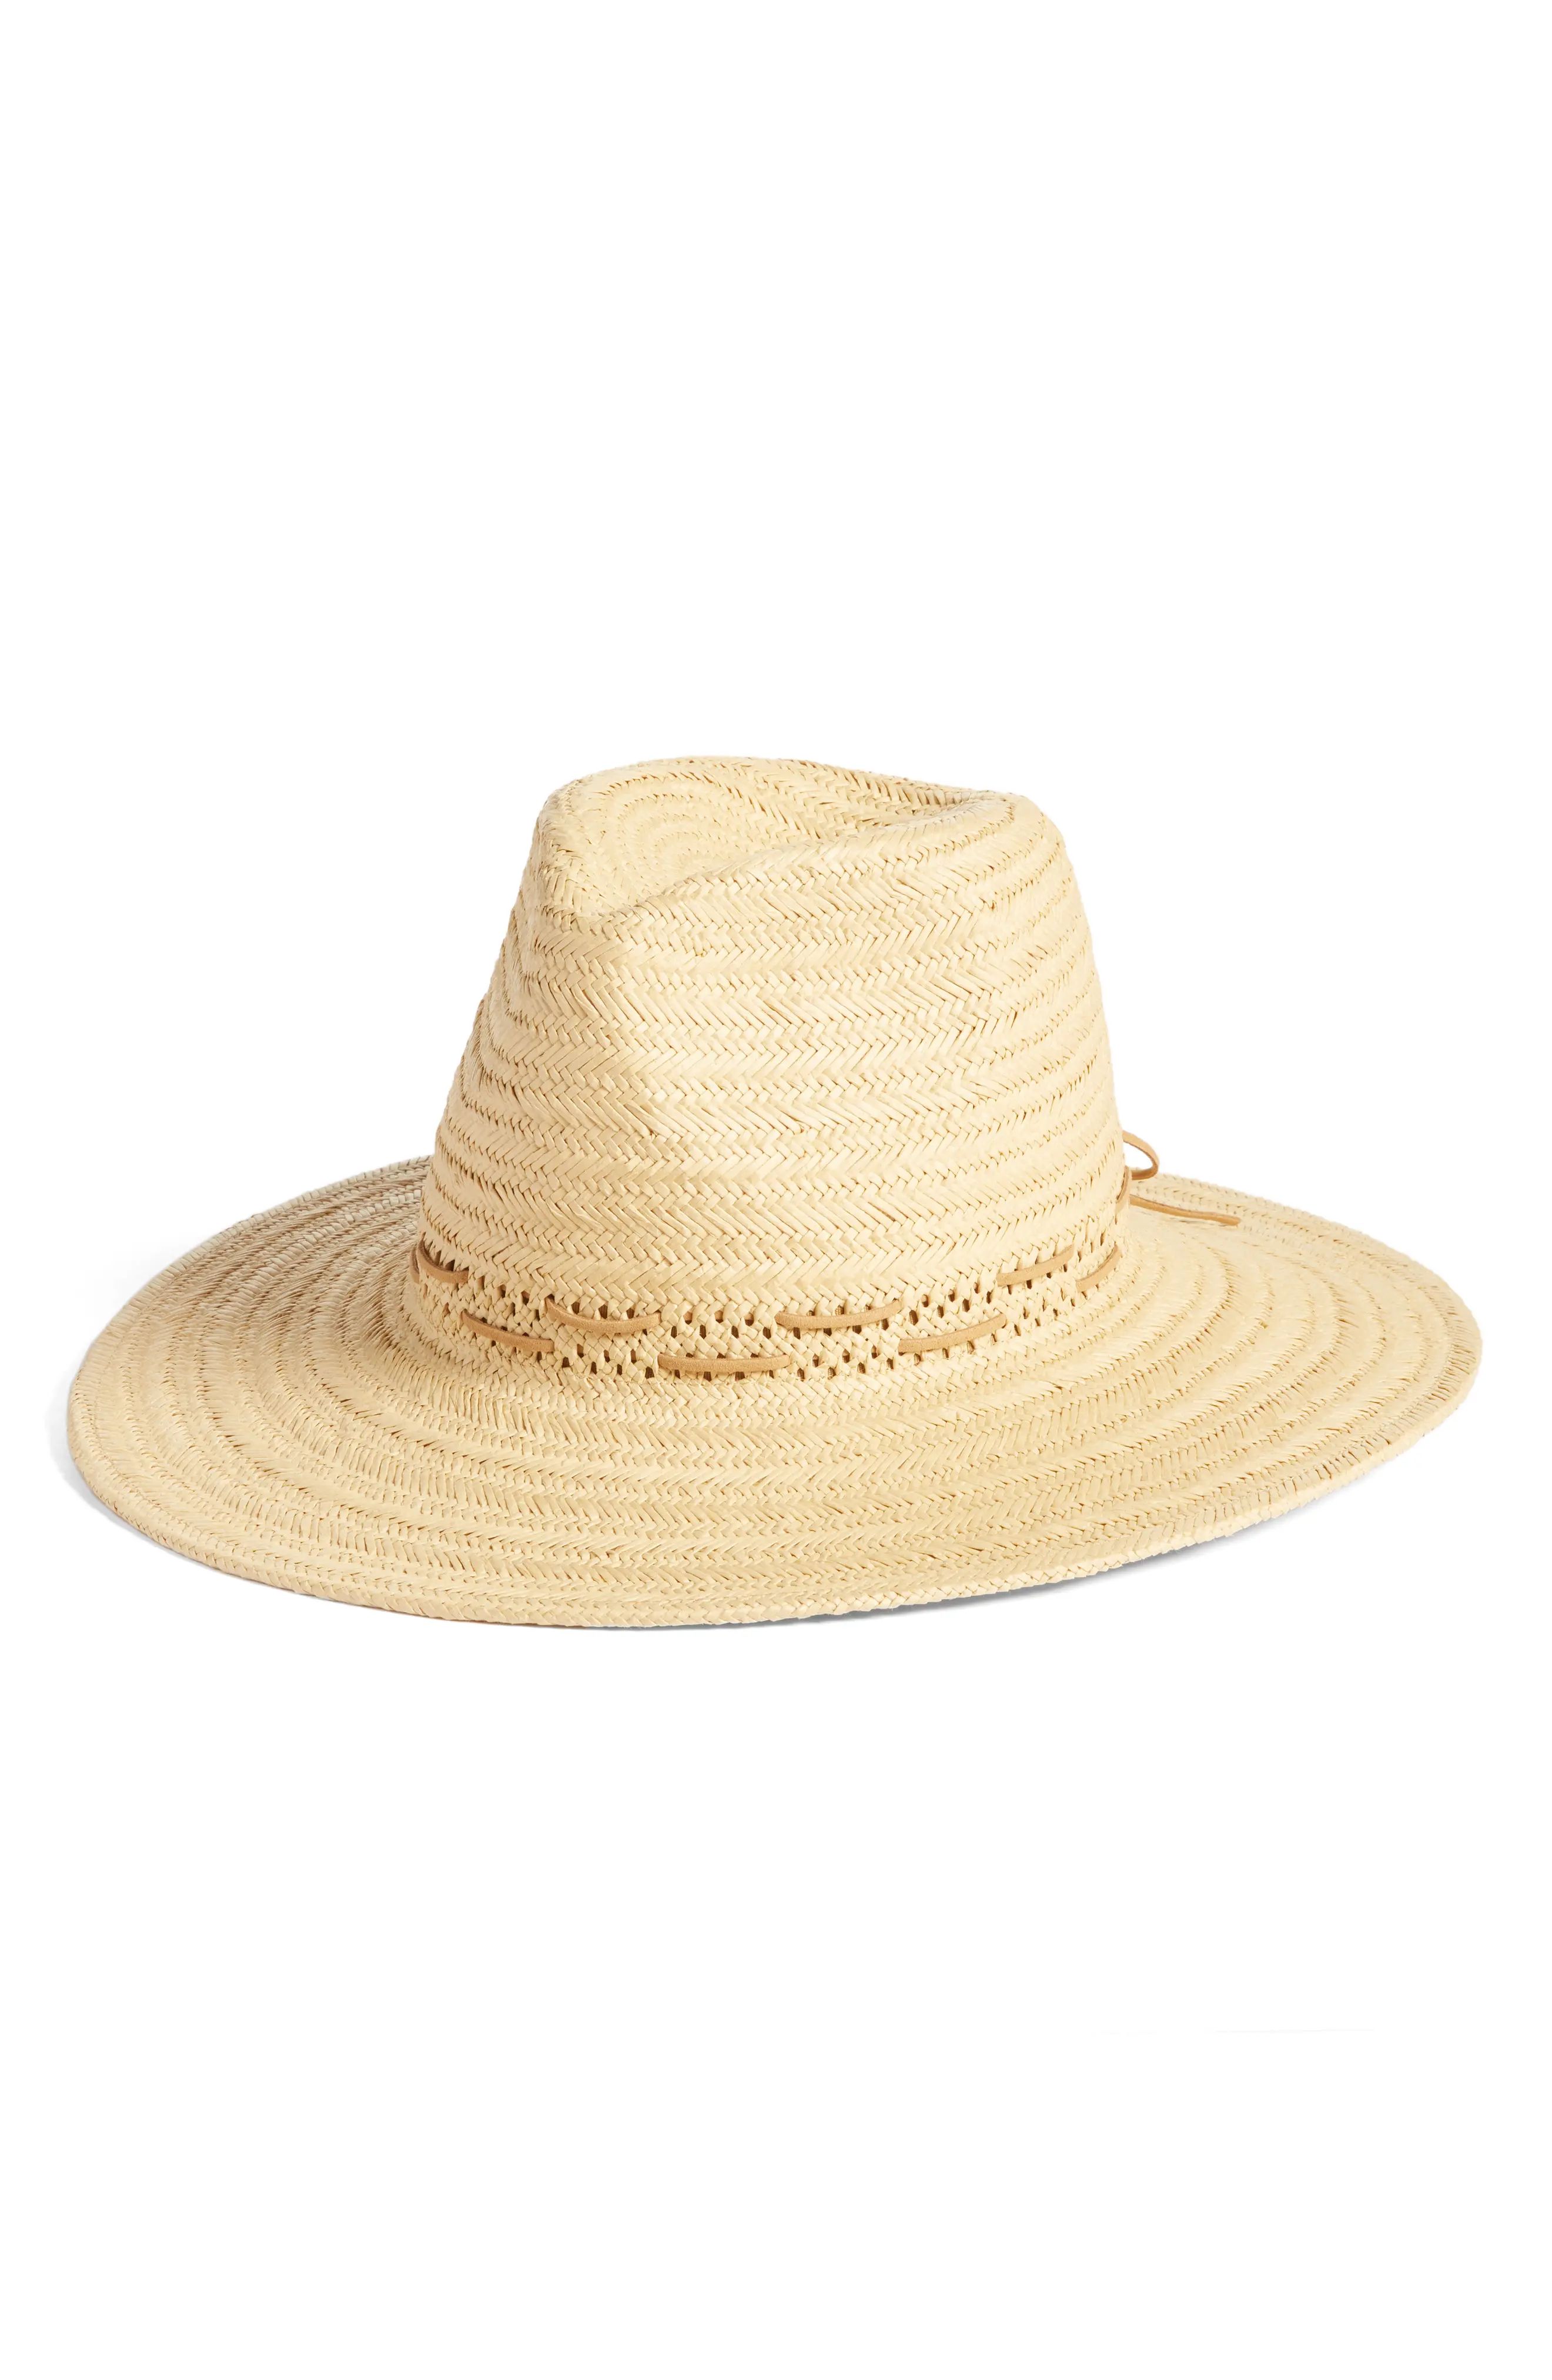 Treasure & Bond Hand Woven Panama Hat in Tan Light Combo at Nordstrom | Nordstrom